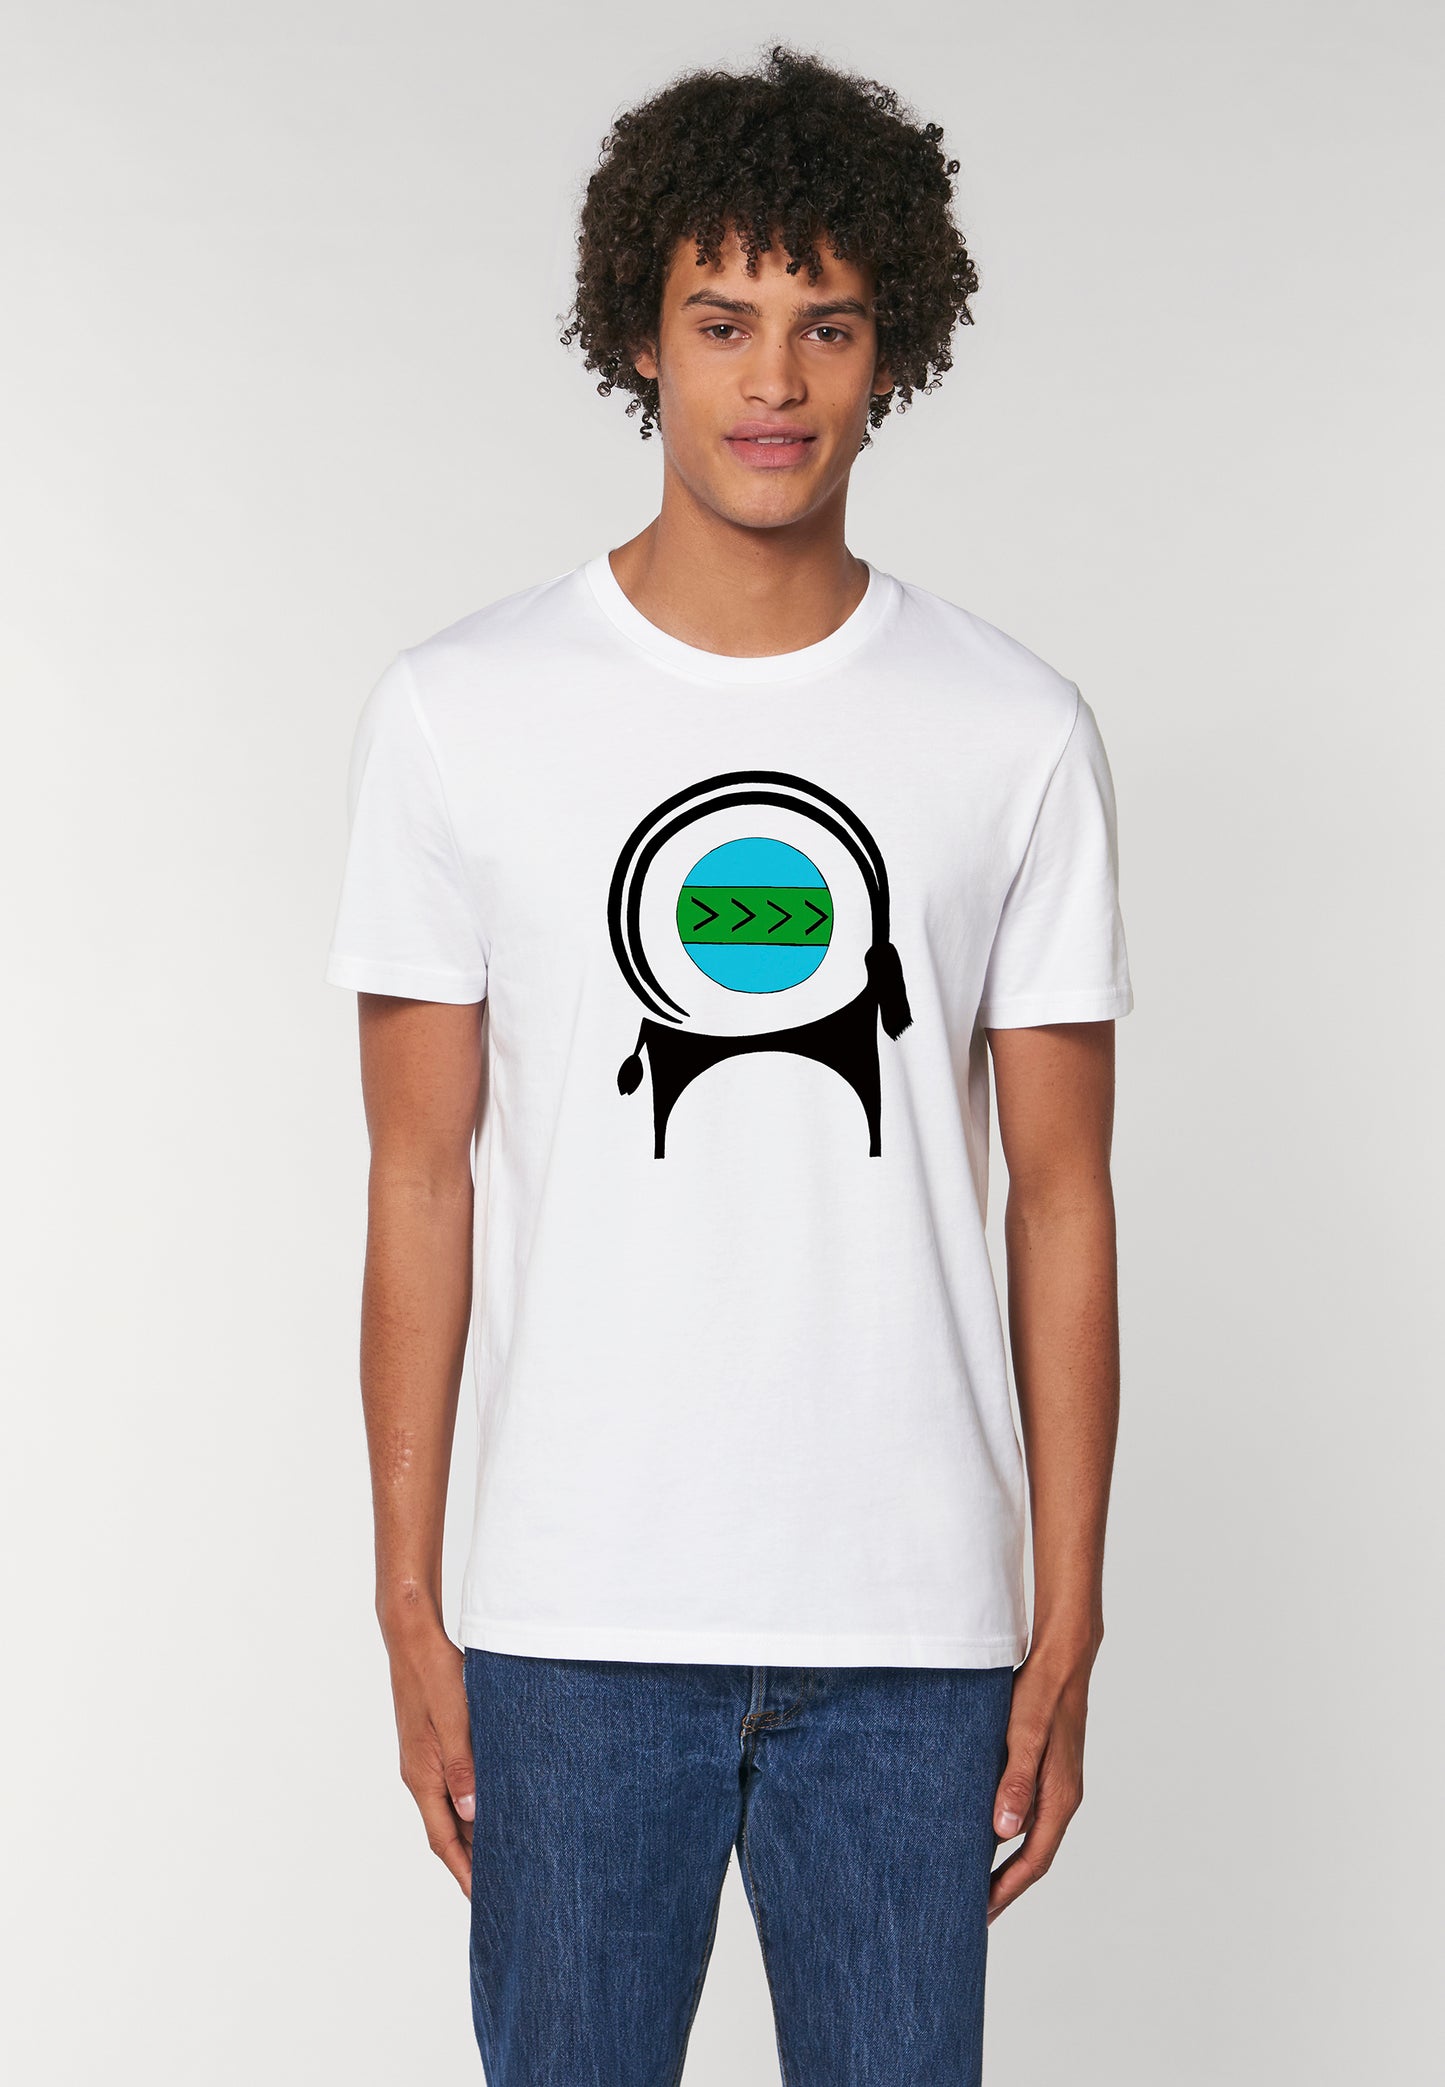 CAPRA-Tee Unisex T-shirt , Printed T-shirt in White  Cotton Jersey